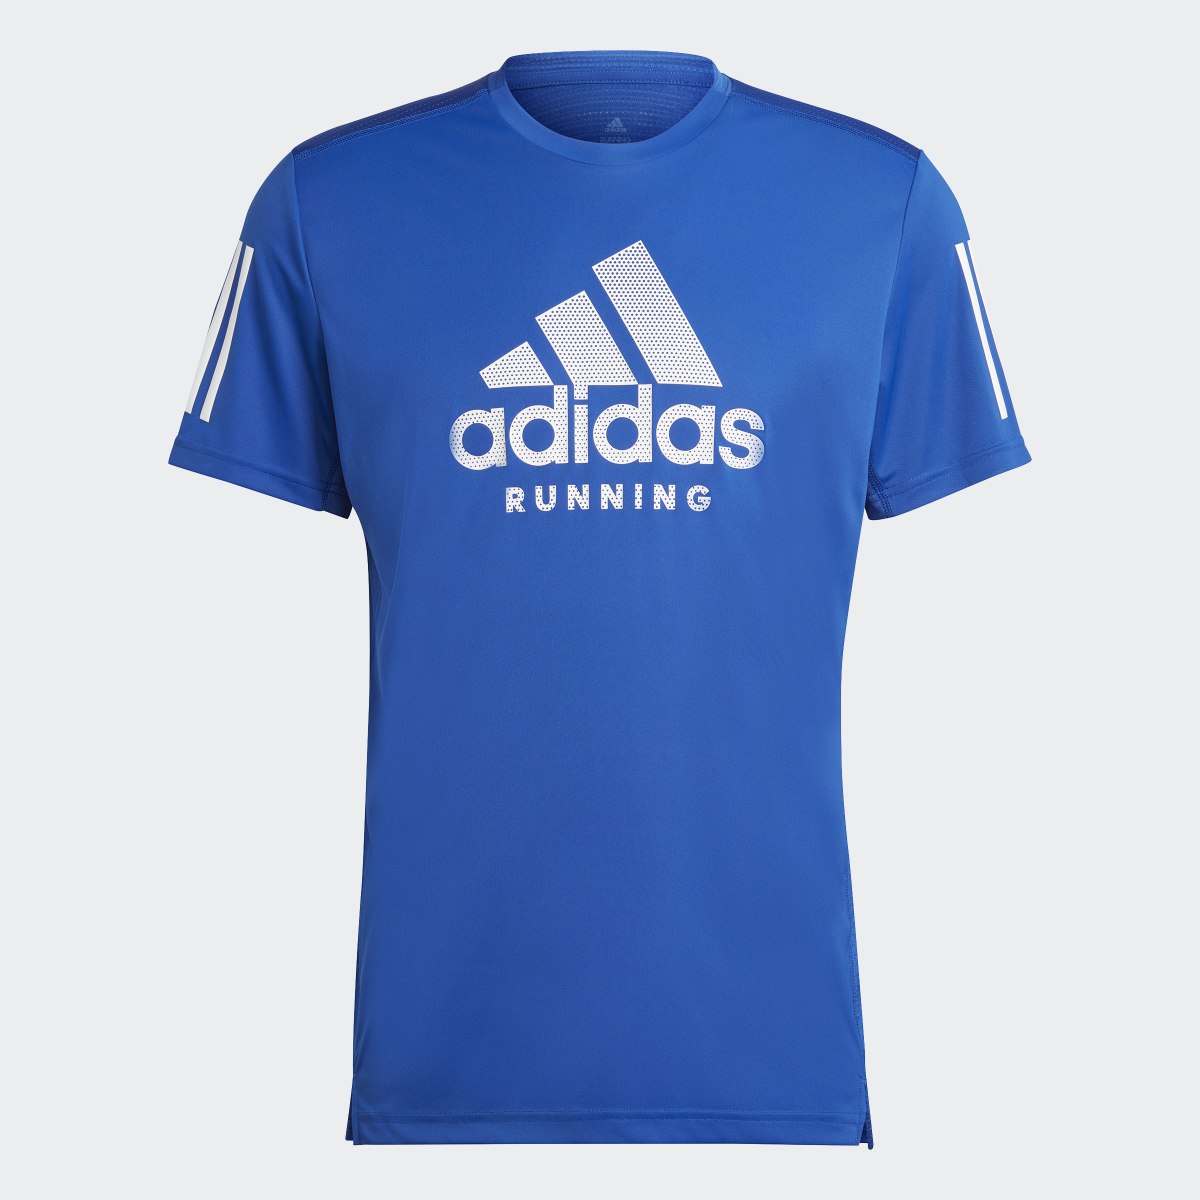 Adidas Own the Run AEROREADY Graphics In-Line Running Short Sleeve T-Shirt. 5